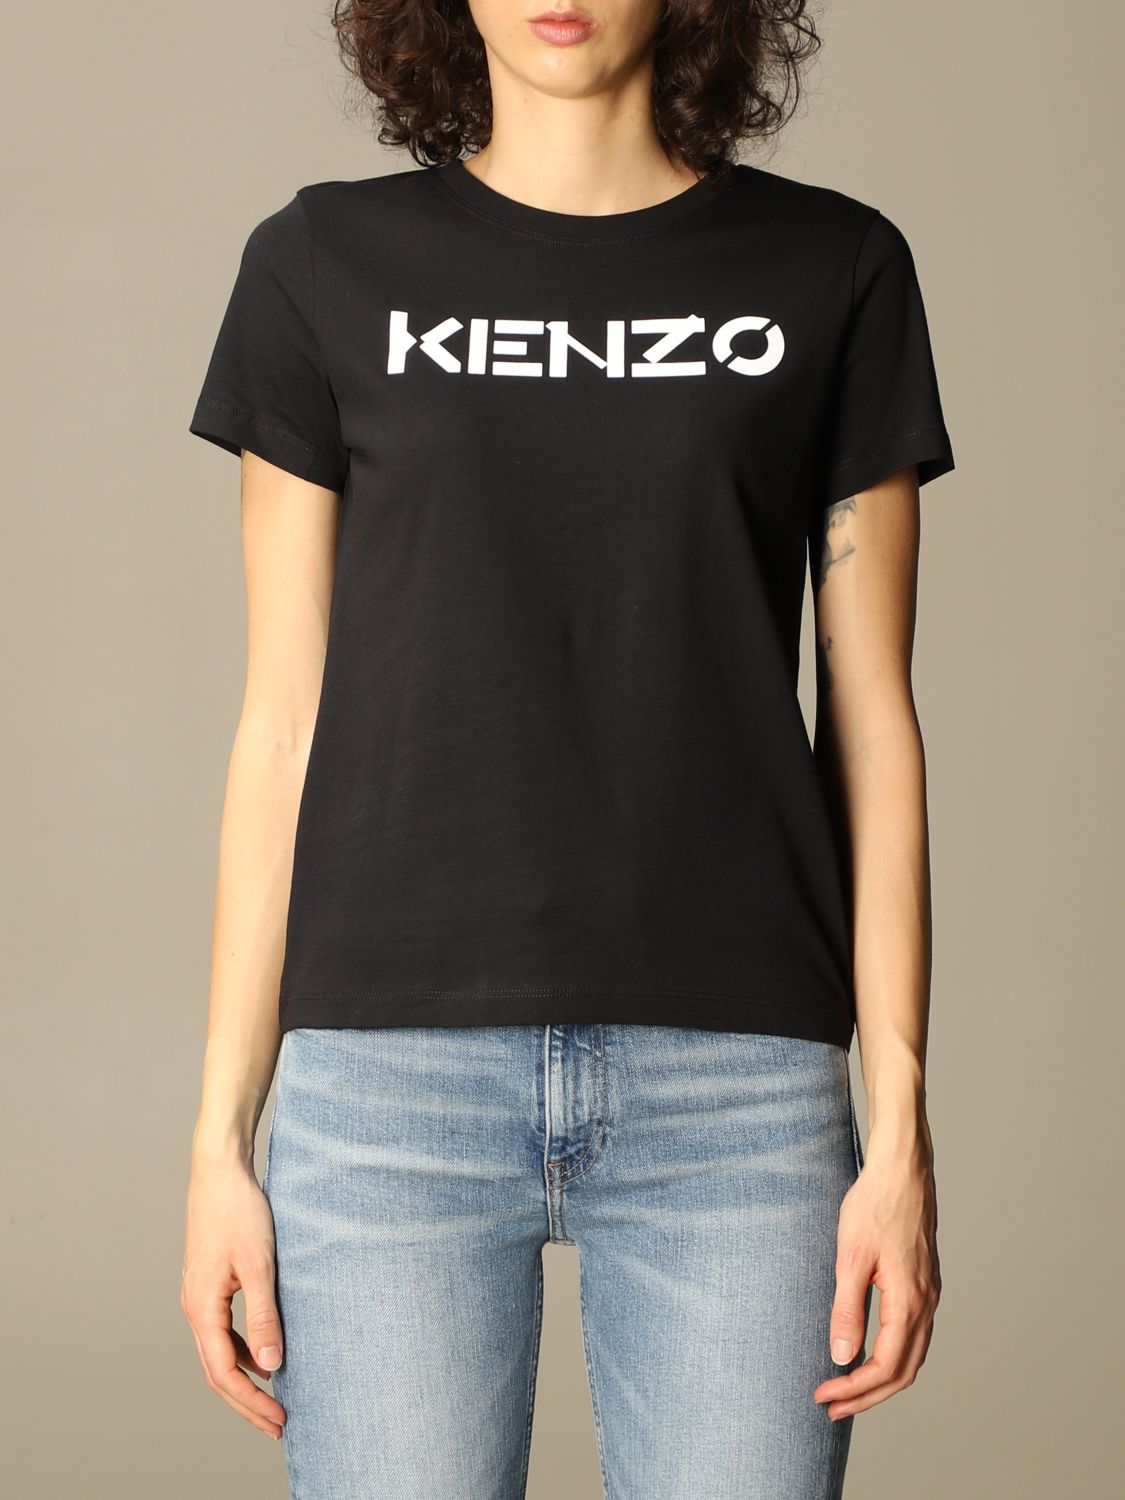 kenzo t shirt ladies